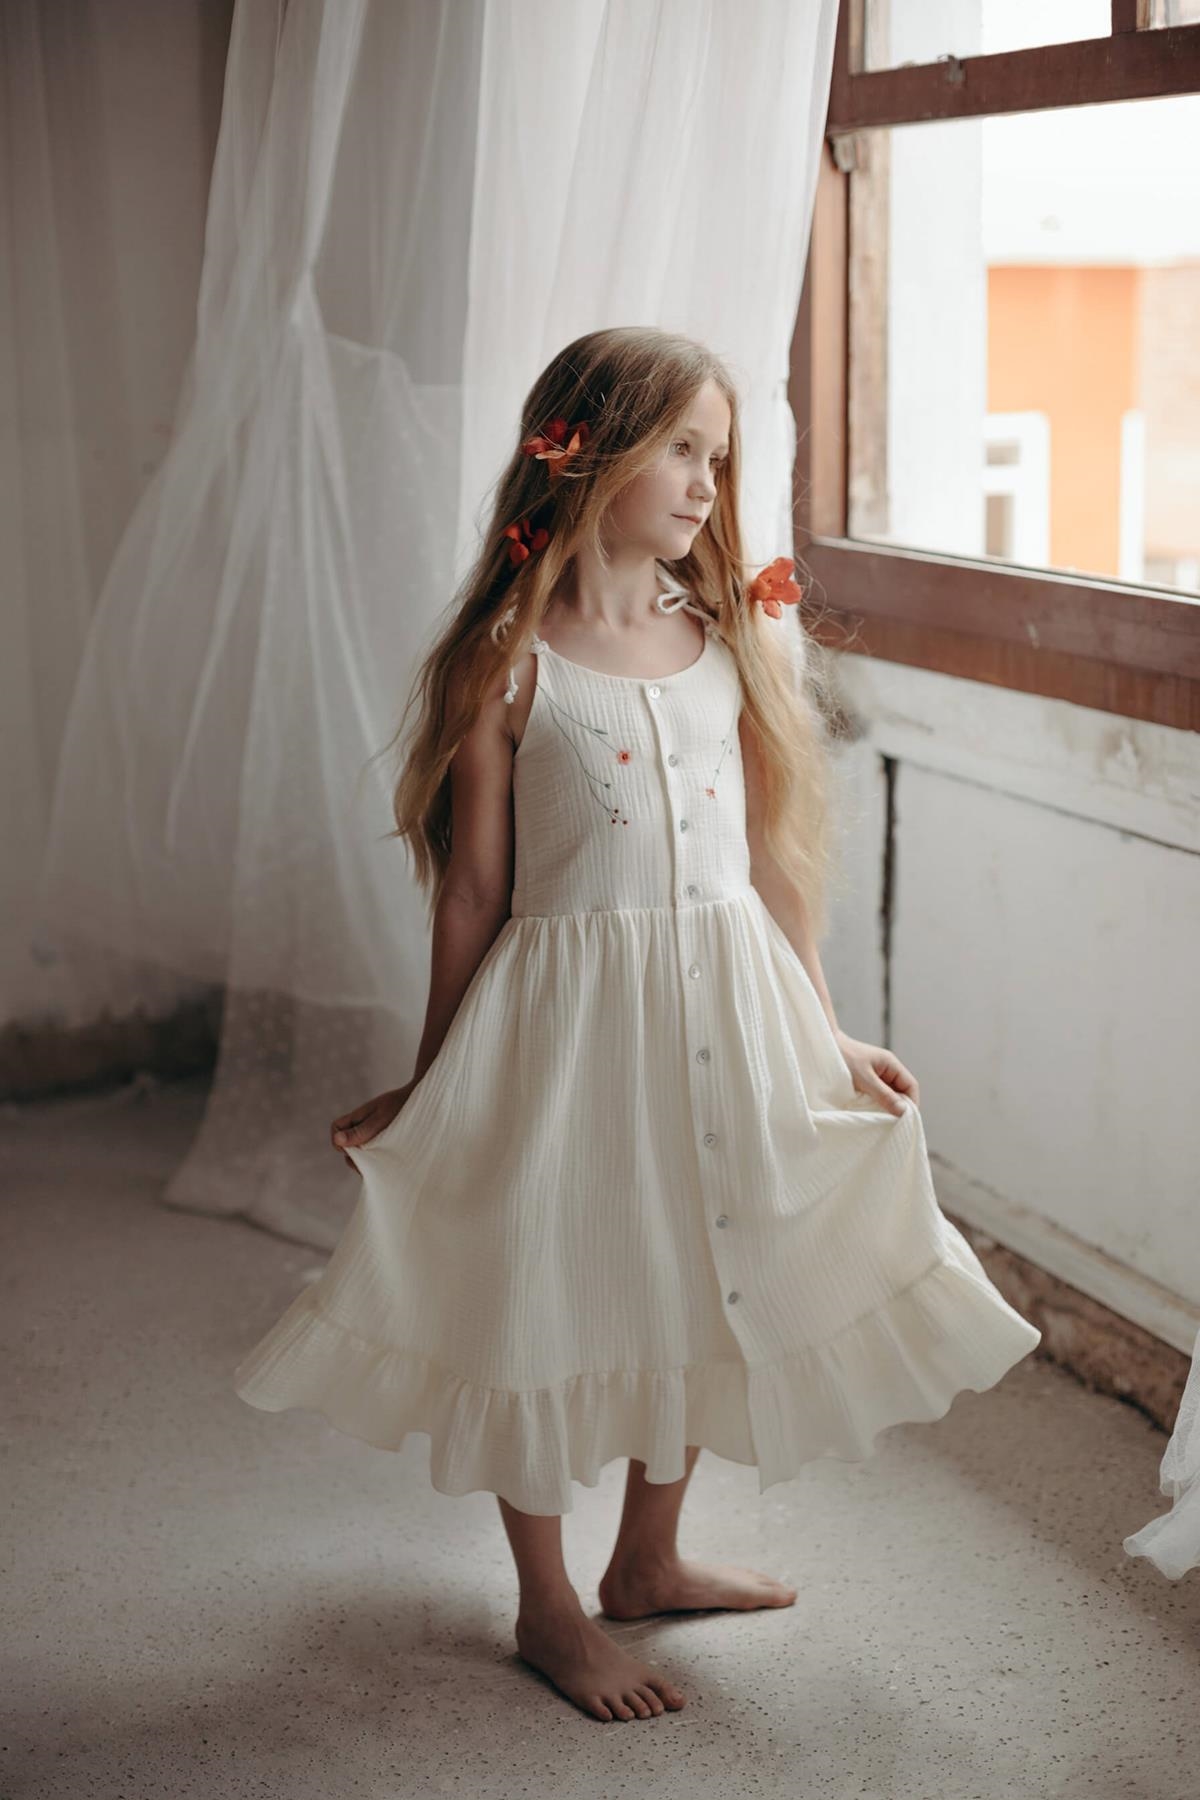 Mod.35.1 Off-white organic dress with straps | SS23 Mod.35.1 Off-white organic dress with straps